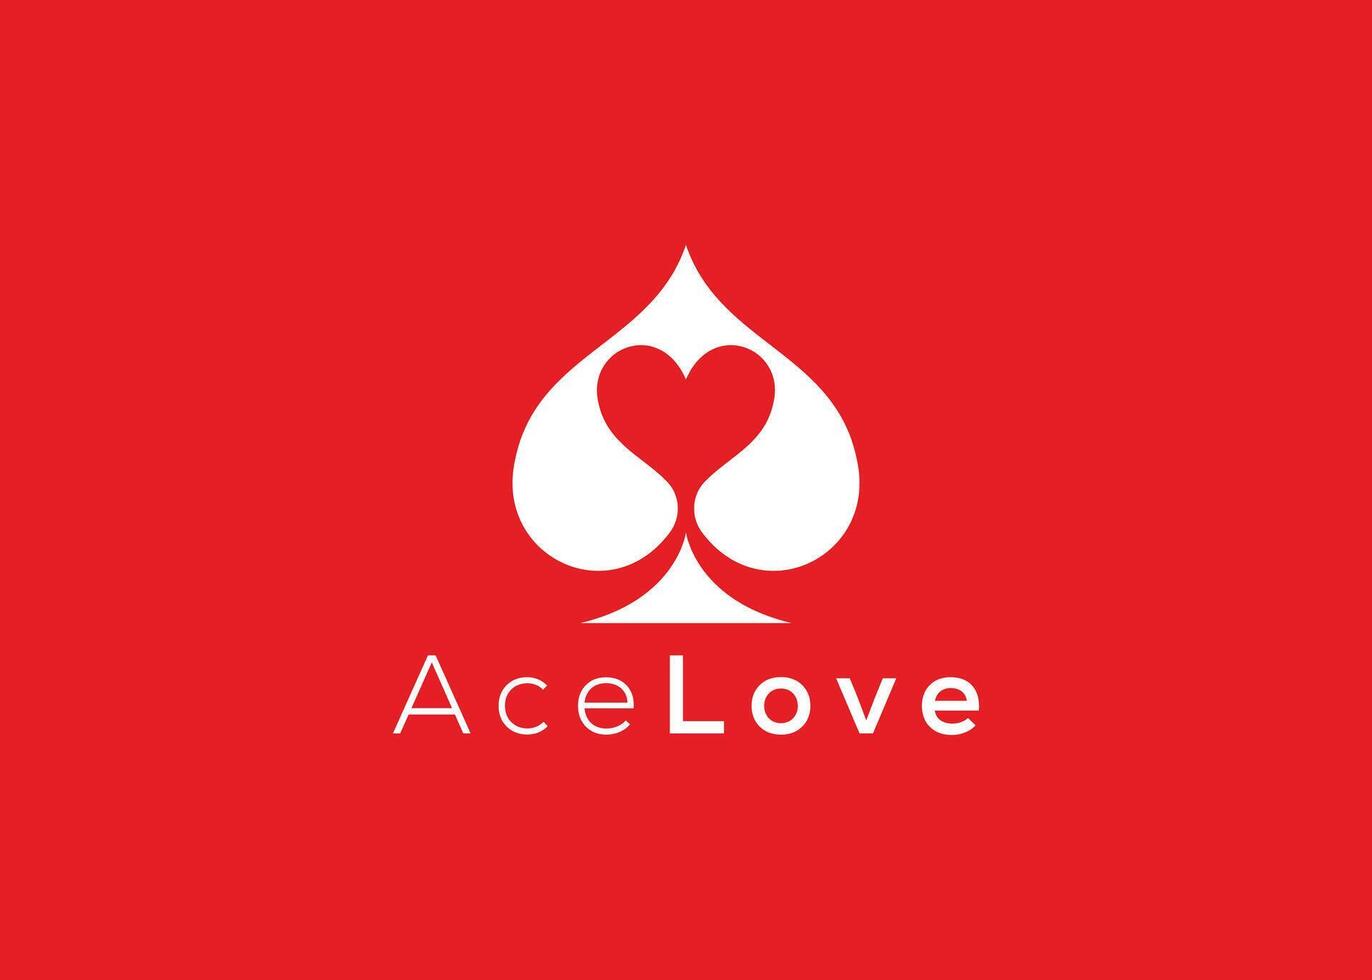 Minimalist Ace Love logo design vector template. Creative red Heart ace shape logo